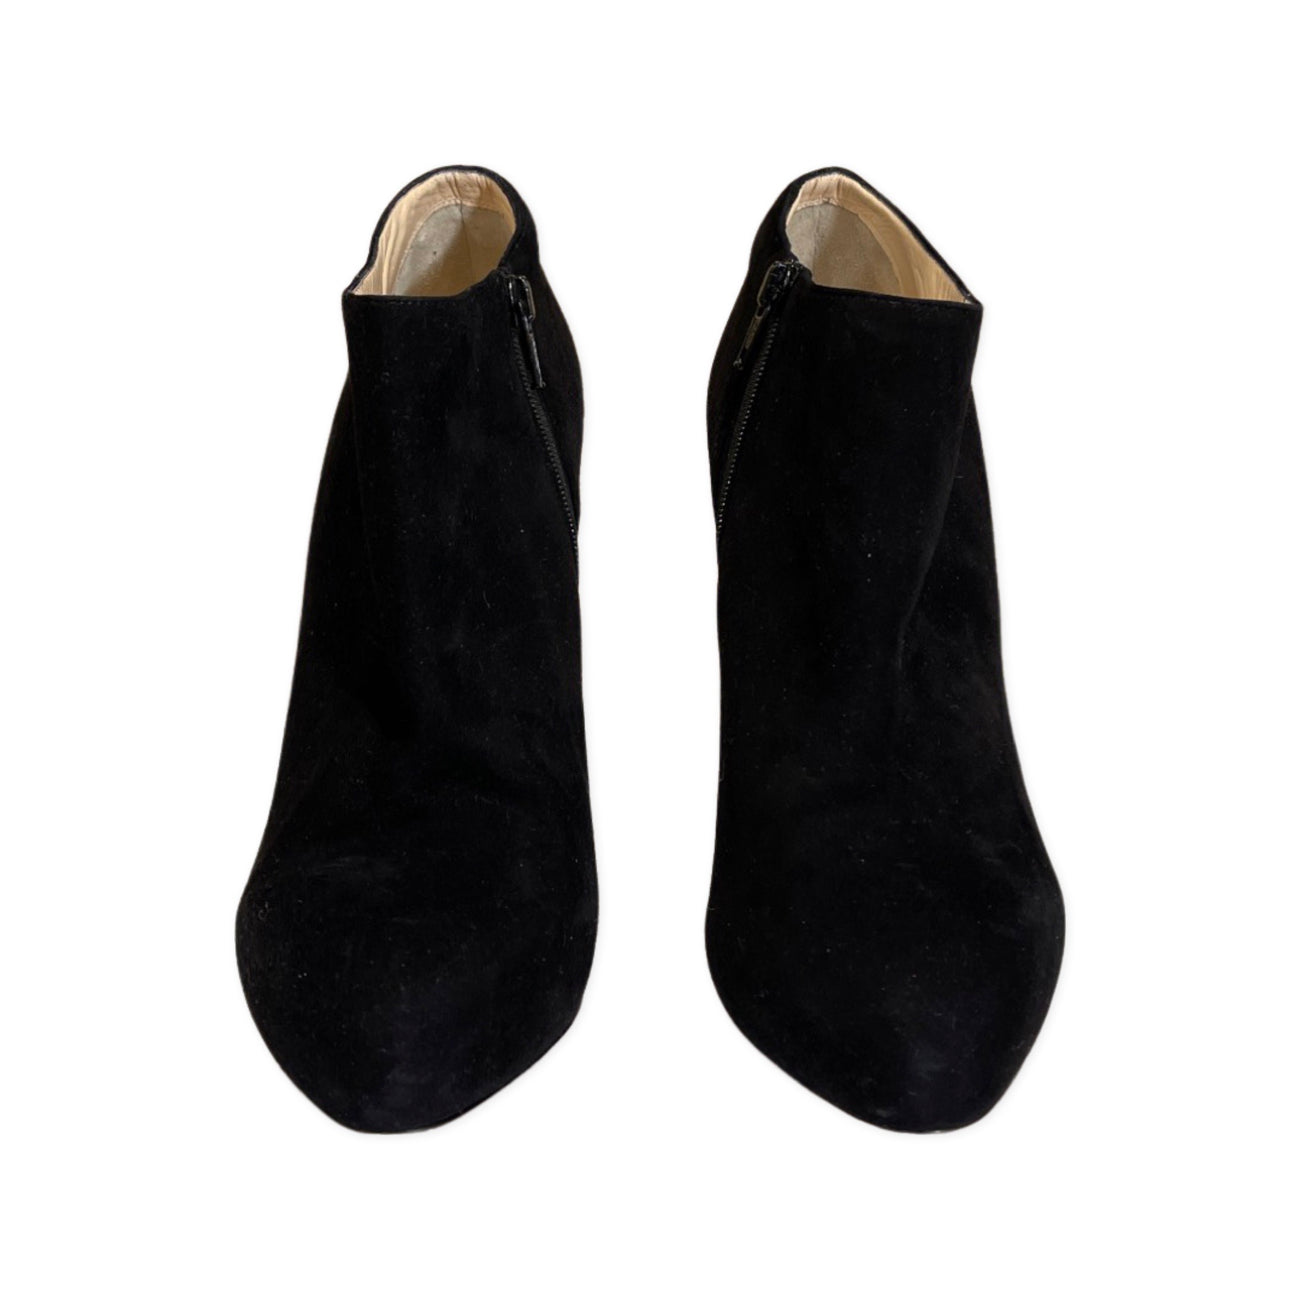 Christian Louboutin Women's Alixos 55 Black Suede Leather Boots